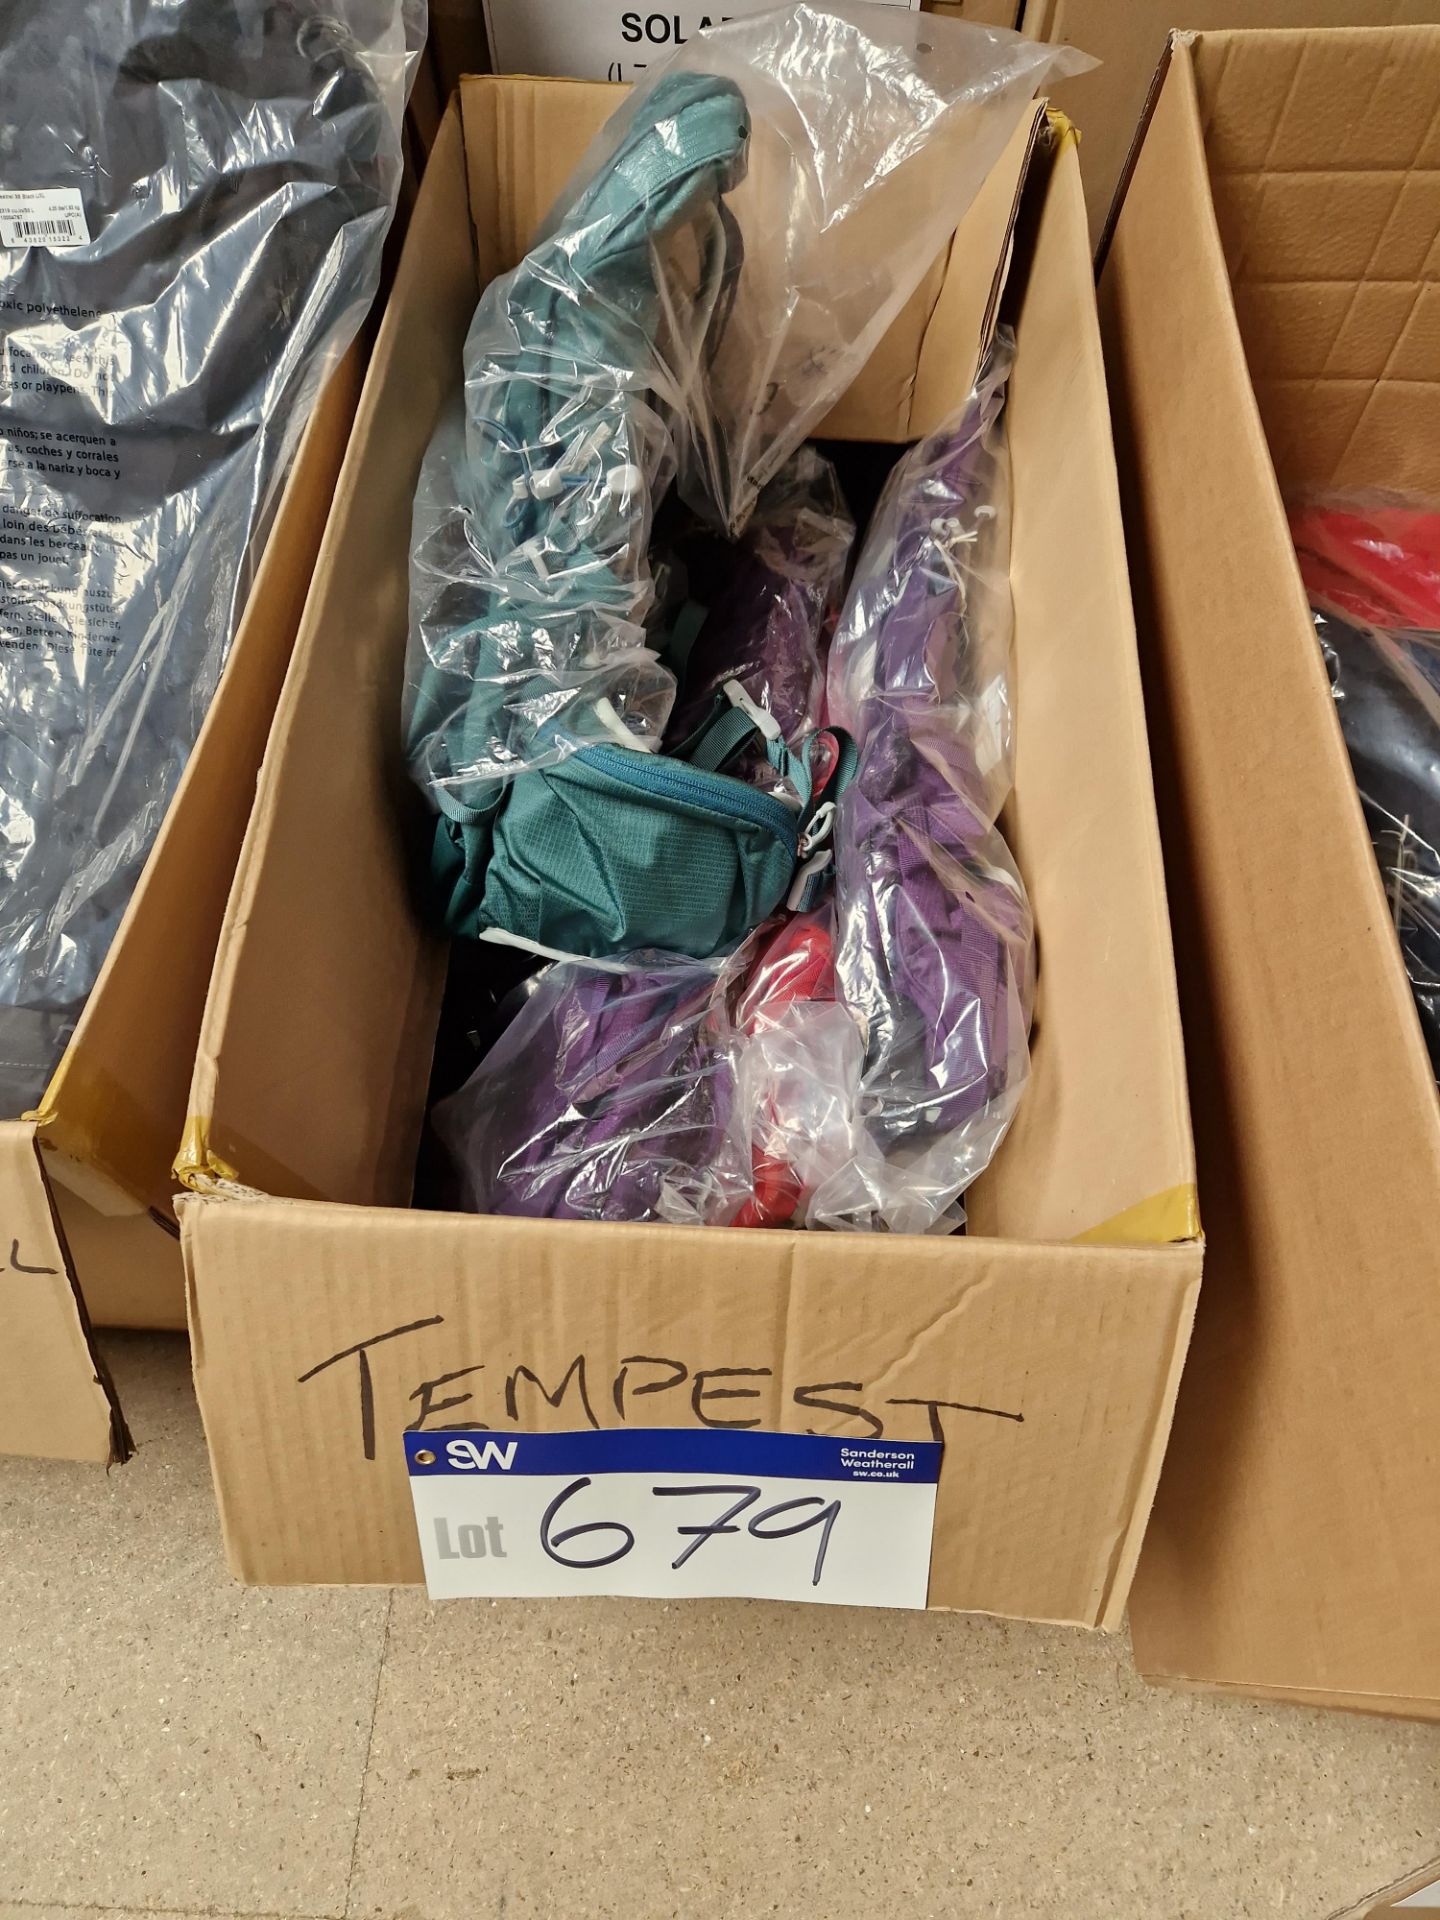 Four Osprey Talon 22 / Tempest 24 Backpacks, Colours: Cosmic Red, Voilac Purple, Jasper Green Please